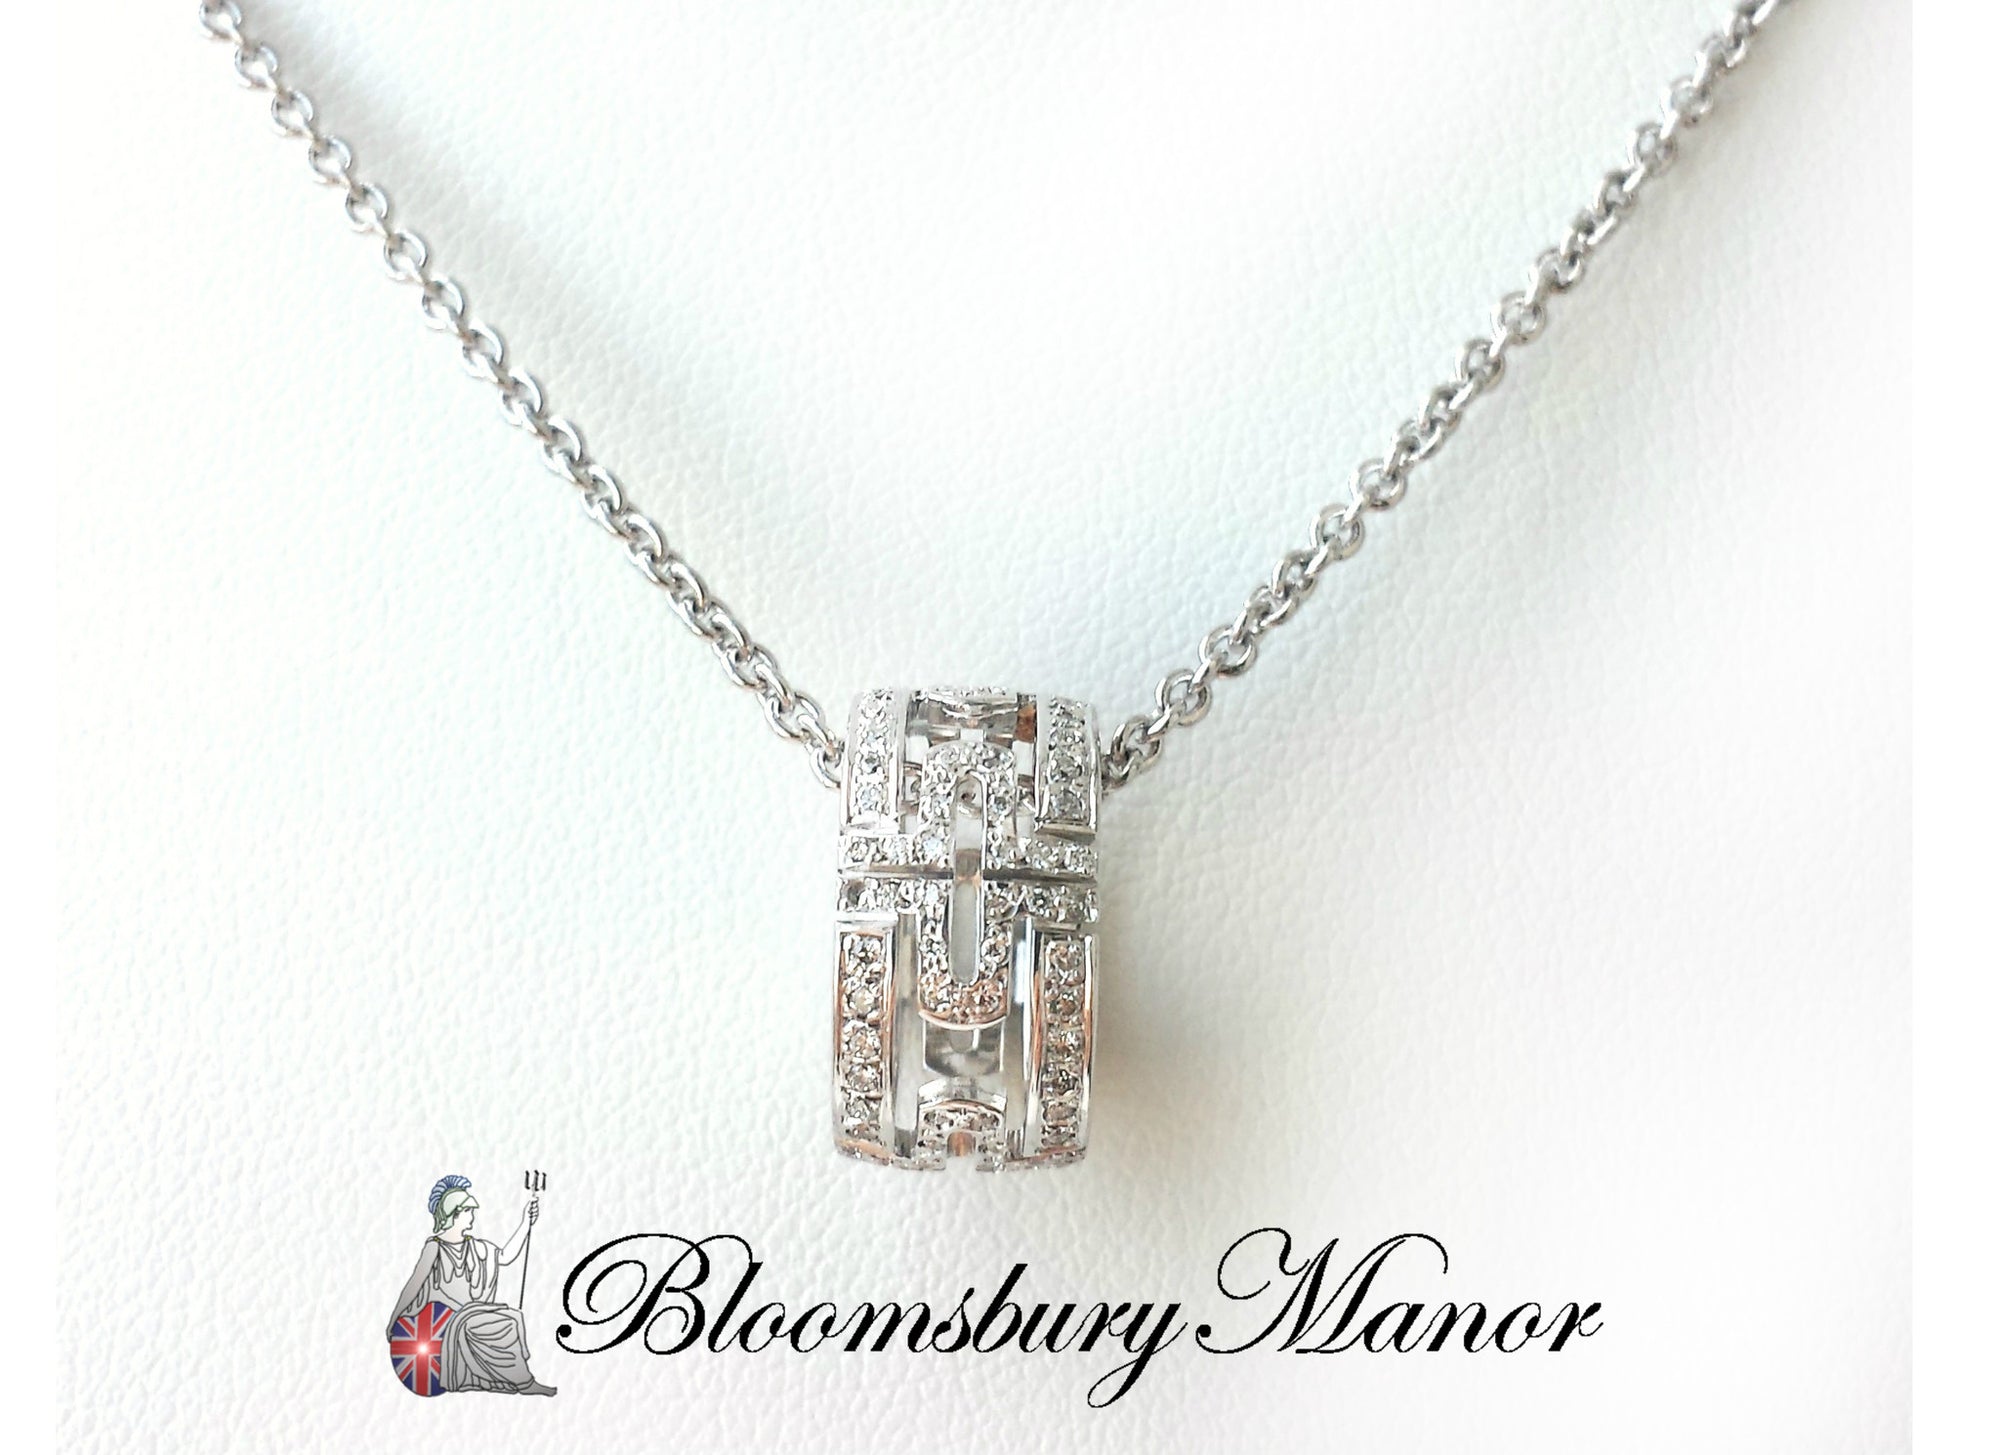 Bulgari Bvlgari Parentesi Diamond Necklace 18k White Gold with Box & Bag